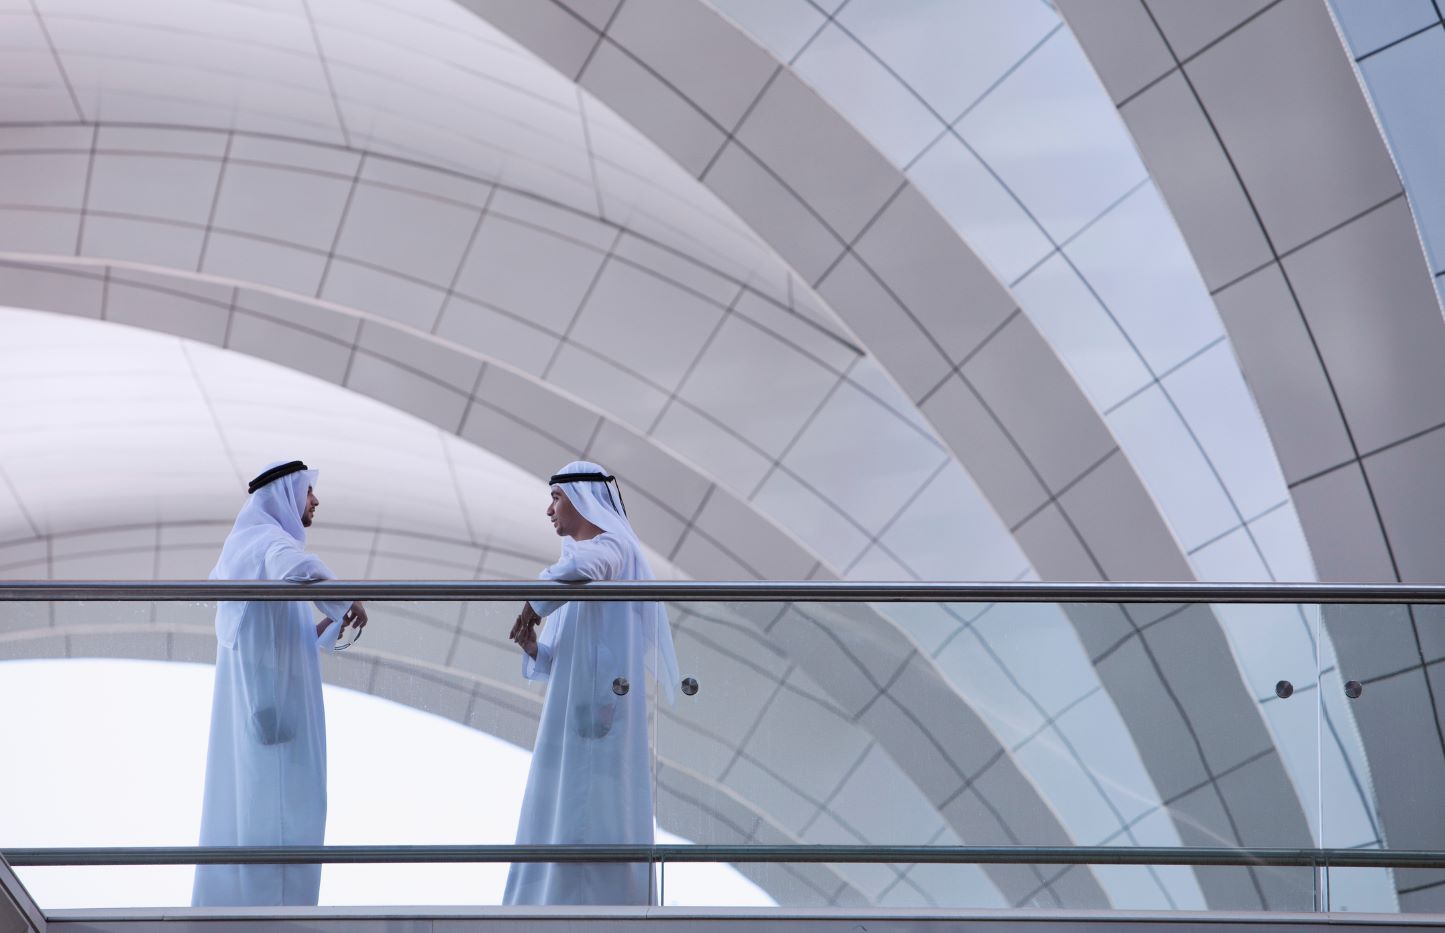 Dubai is a modern hub for technology, innovations, healthcare, education and finance